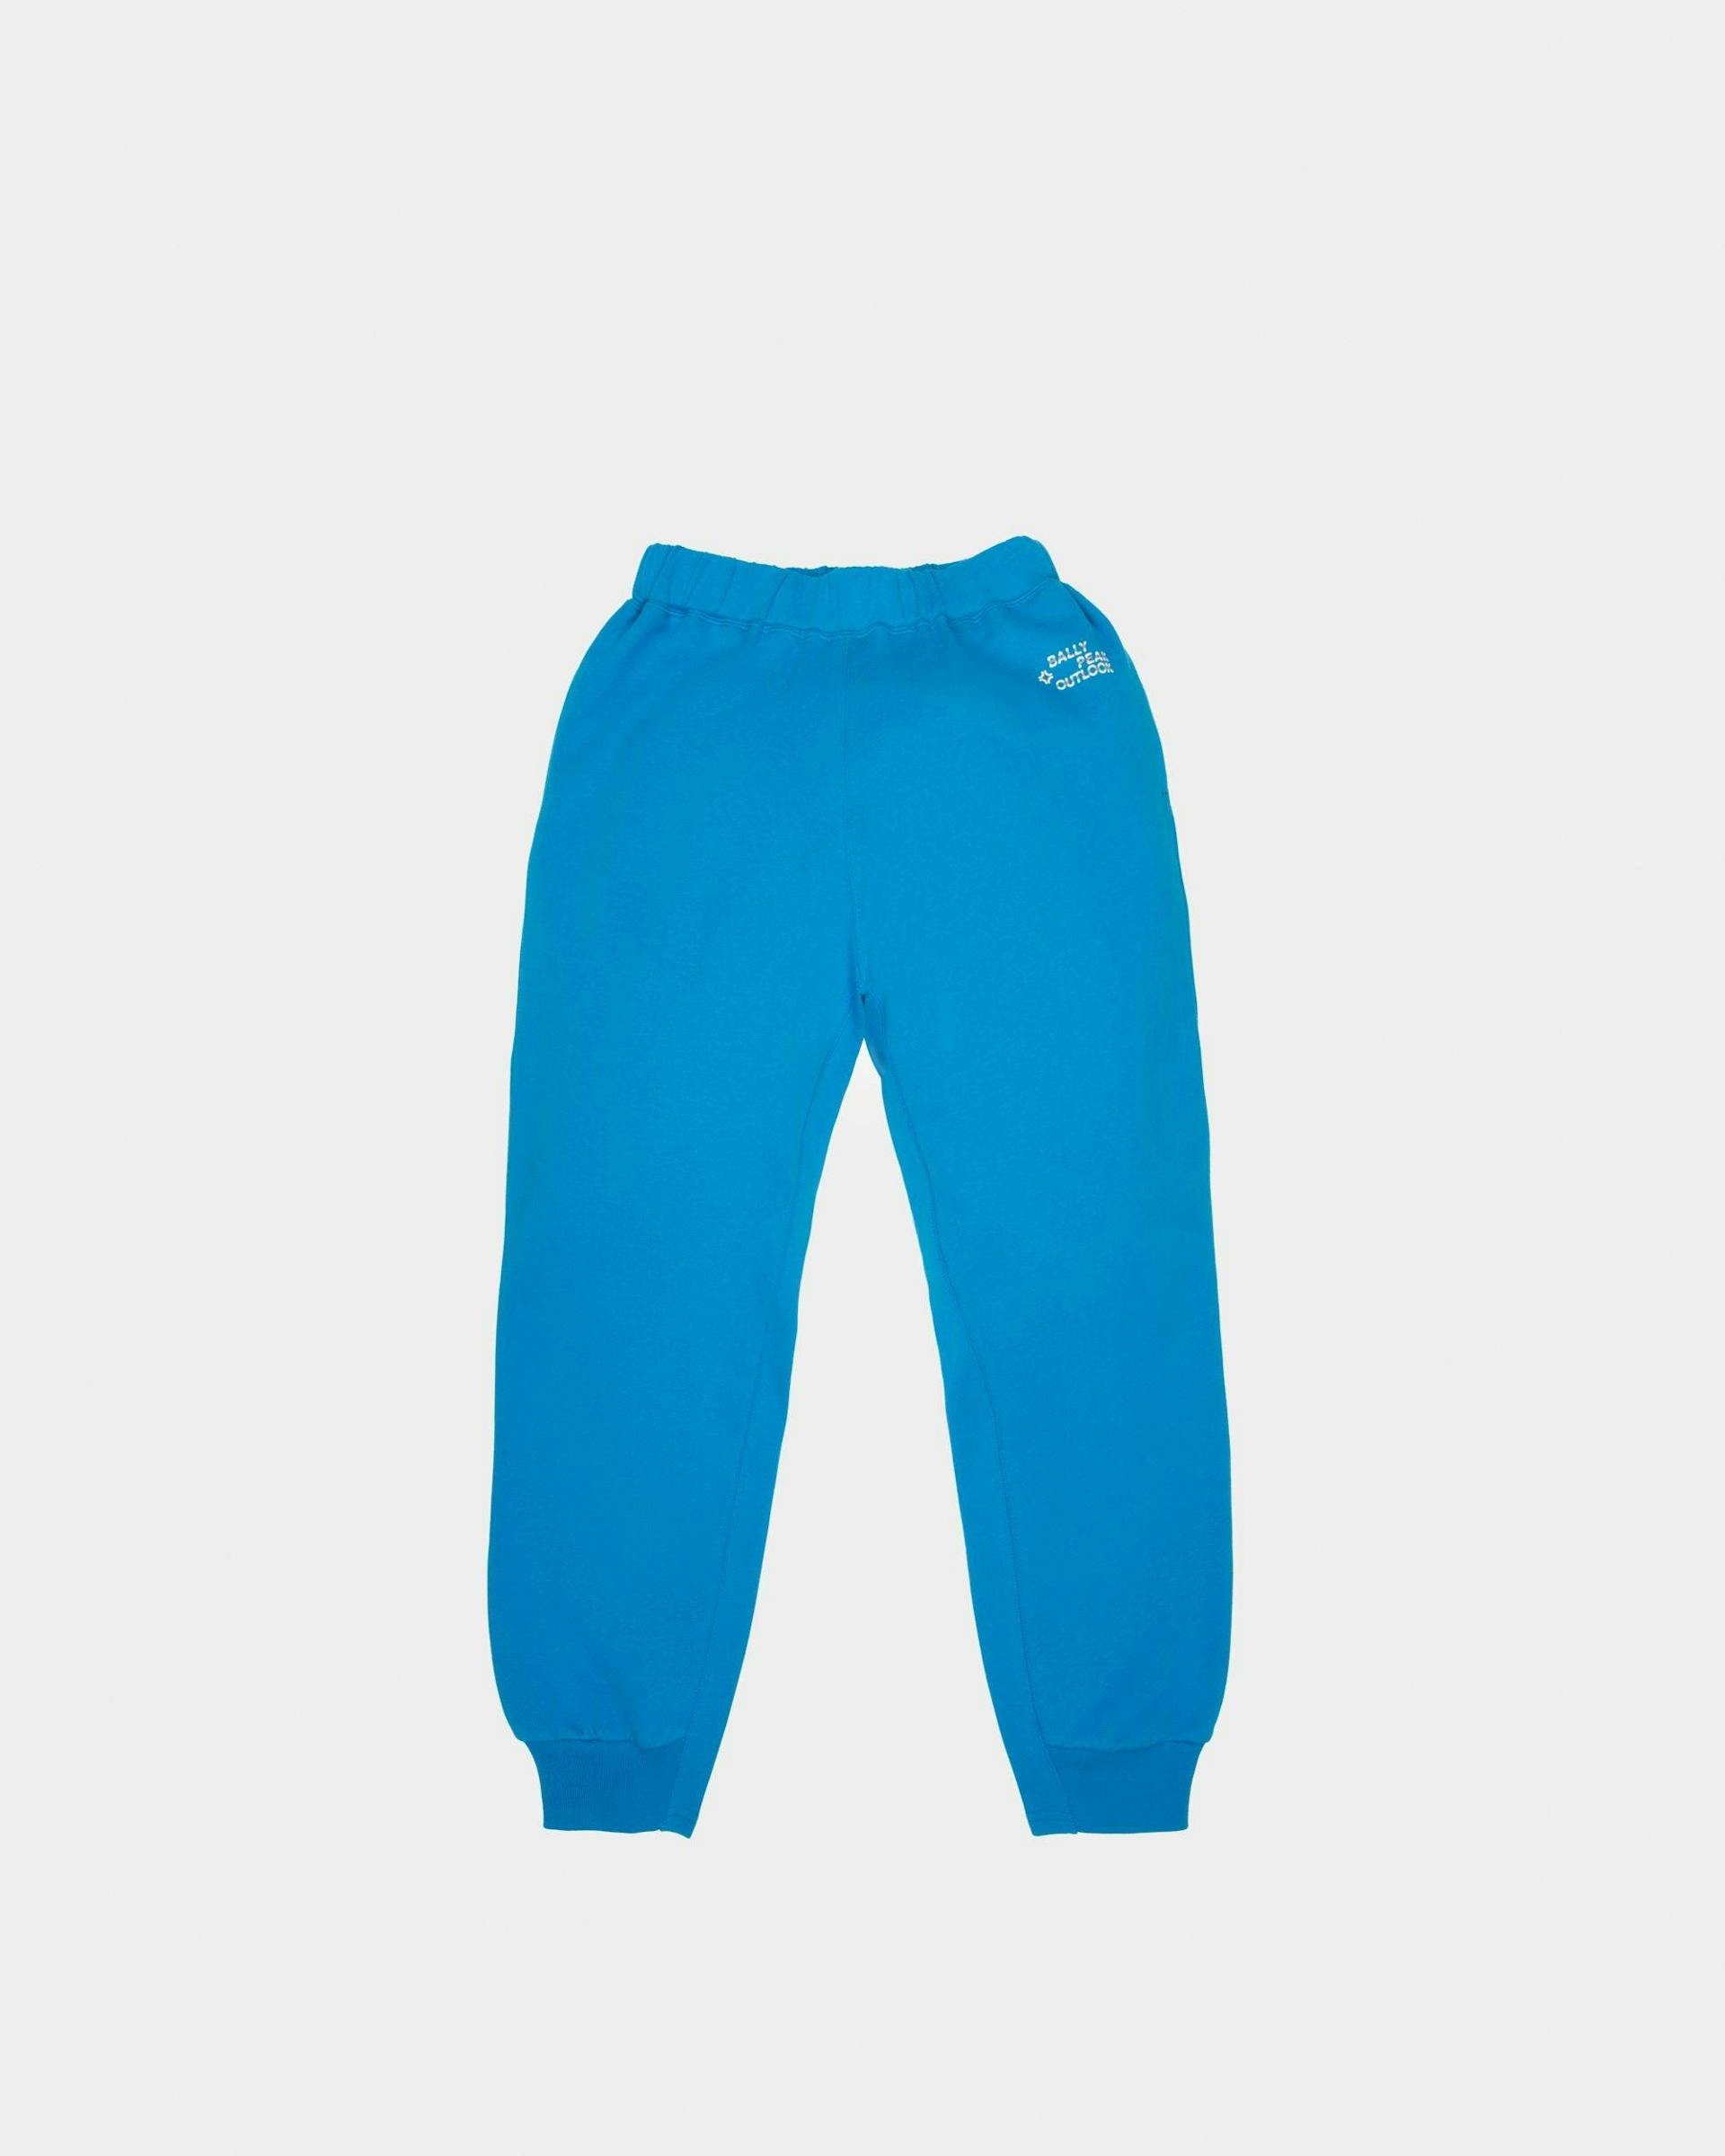 Joggers Bally Peak Outlook In Cotone Organico Colore Blu - Donna - Bally - 01